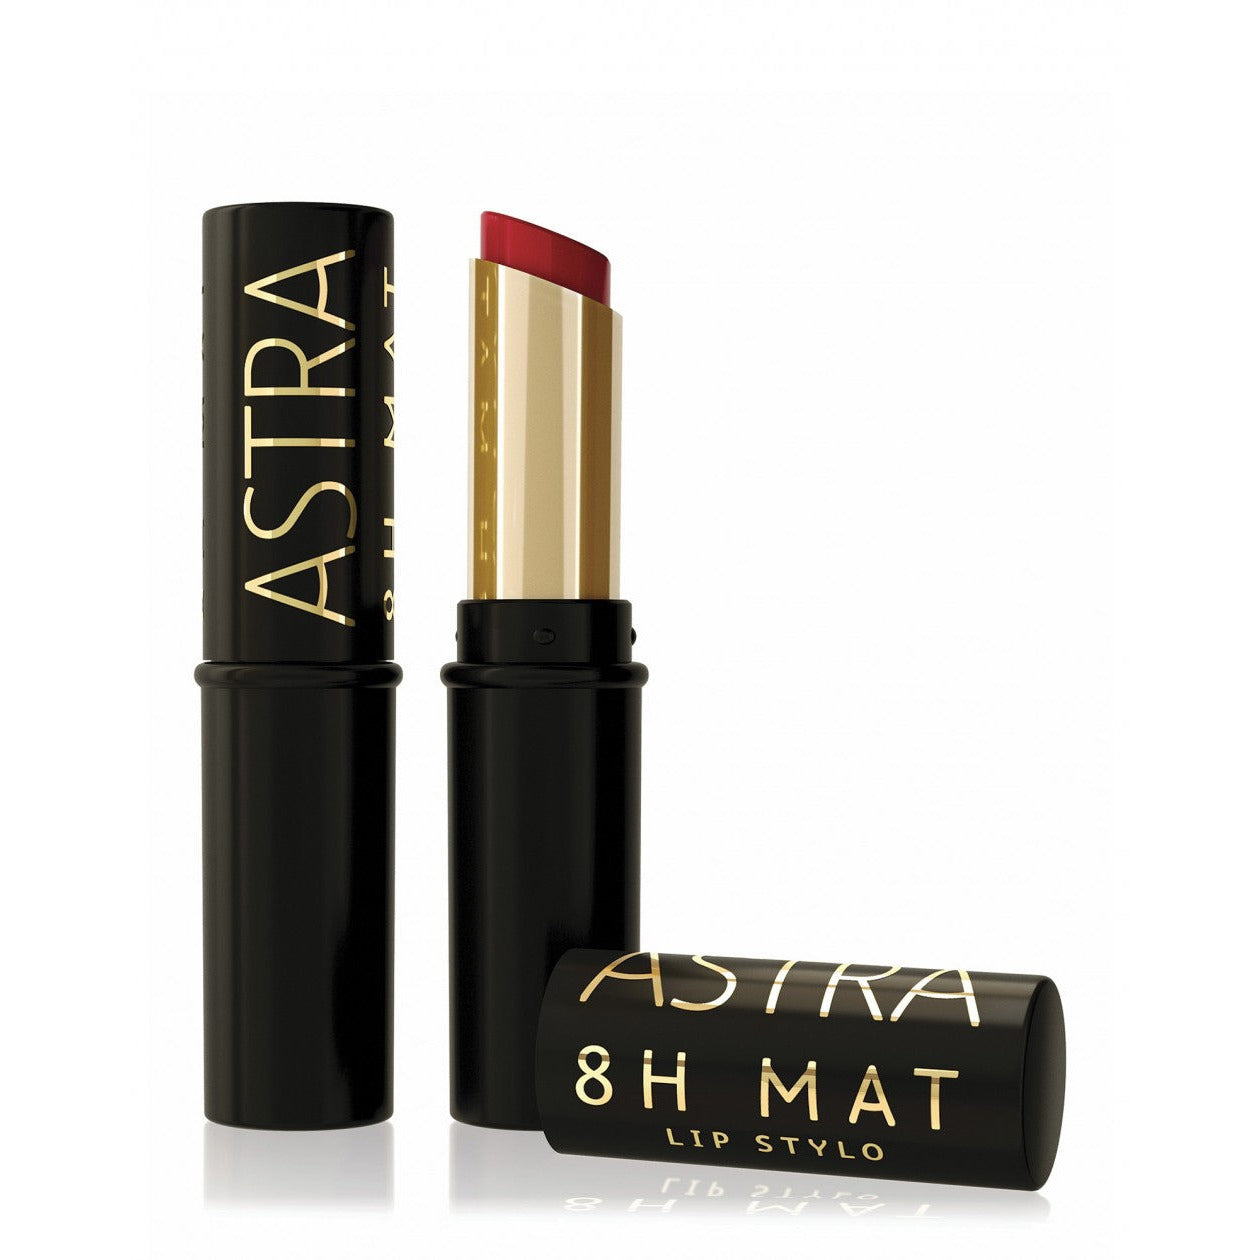 Astra 8H Mat Lip Style Long Lasting Lipstick